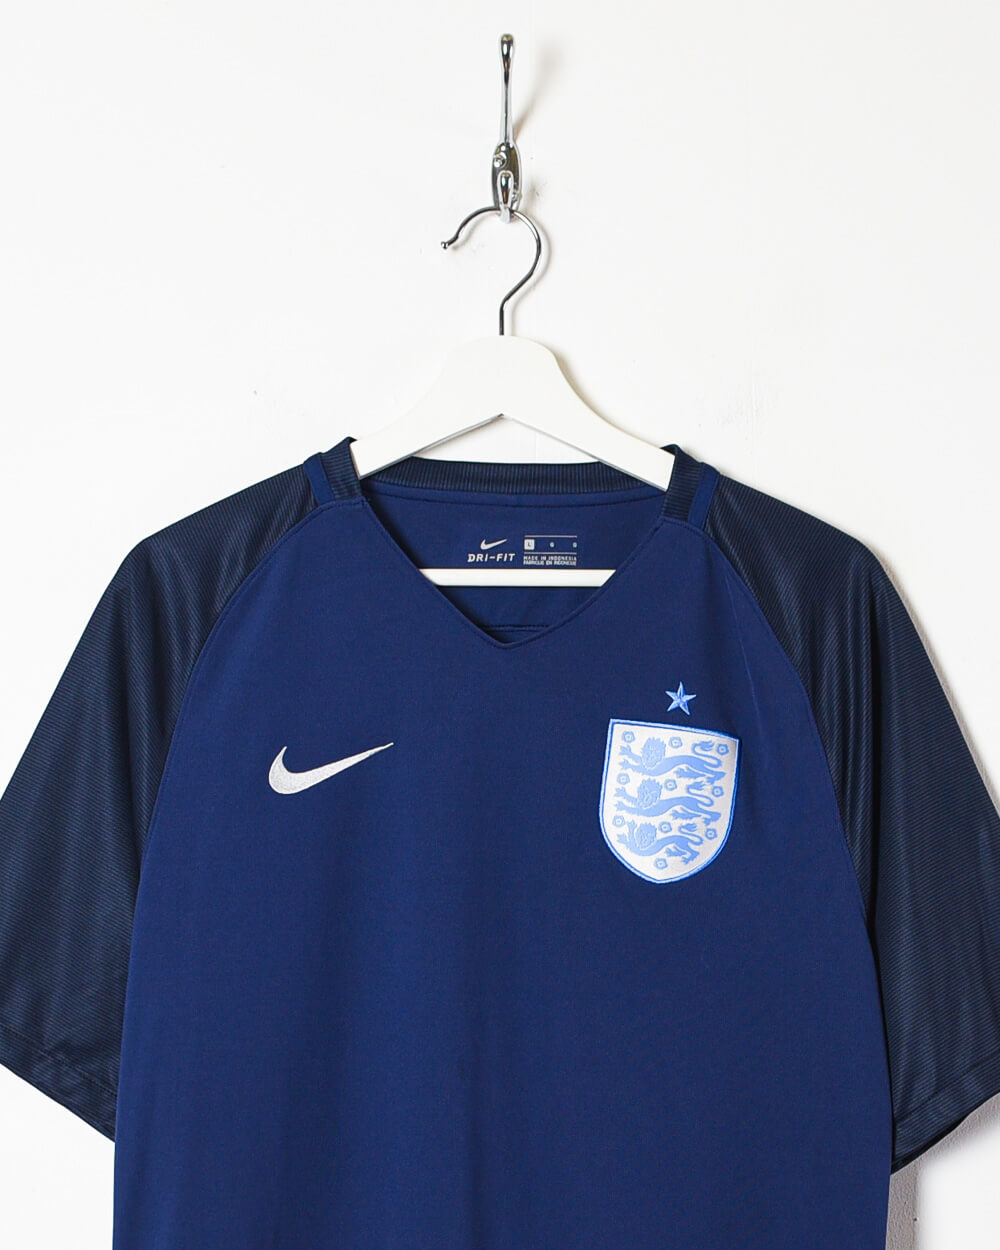 Navy Nike 2017 England Away Shirt - Large